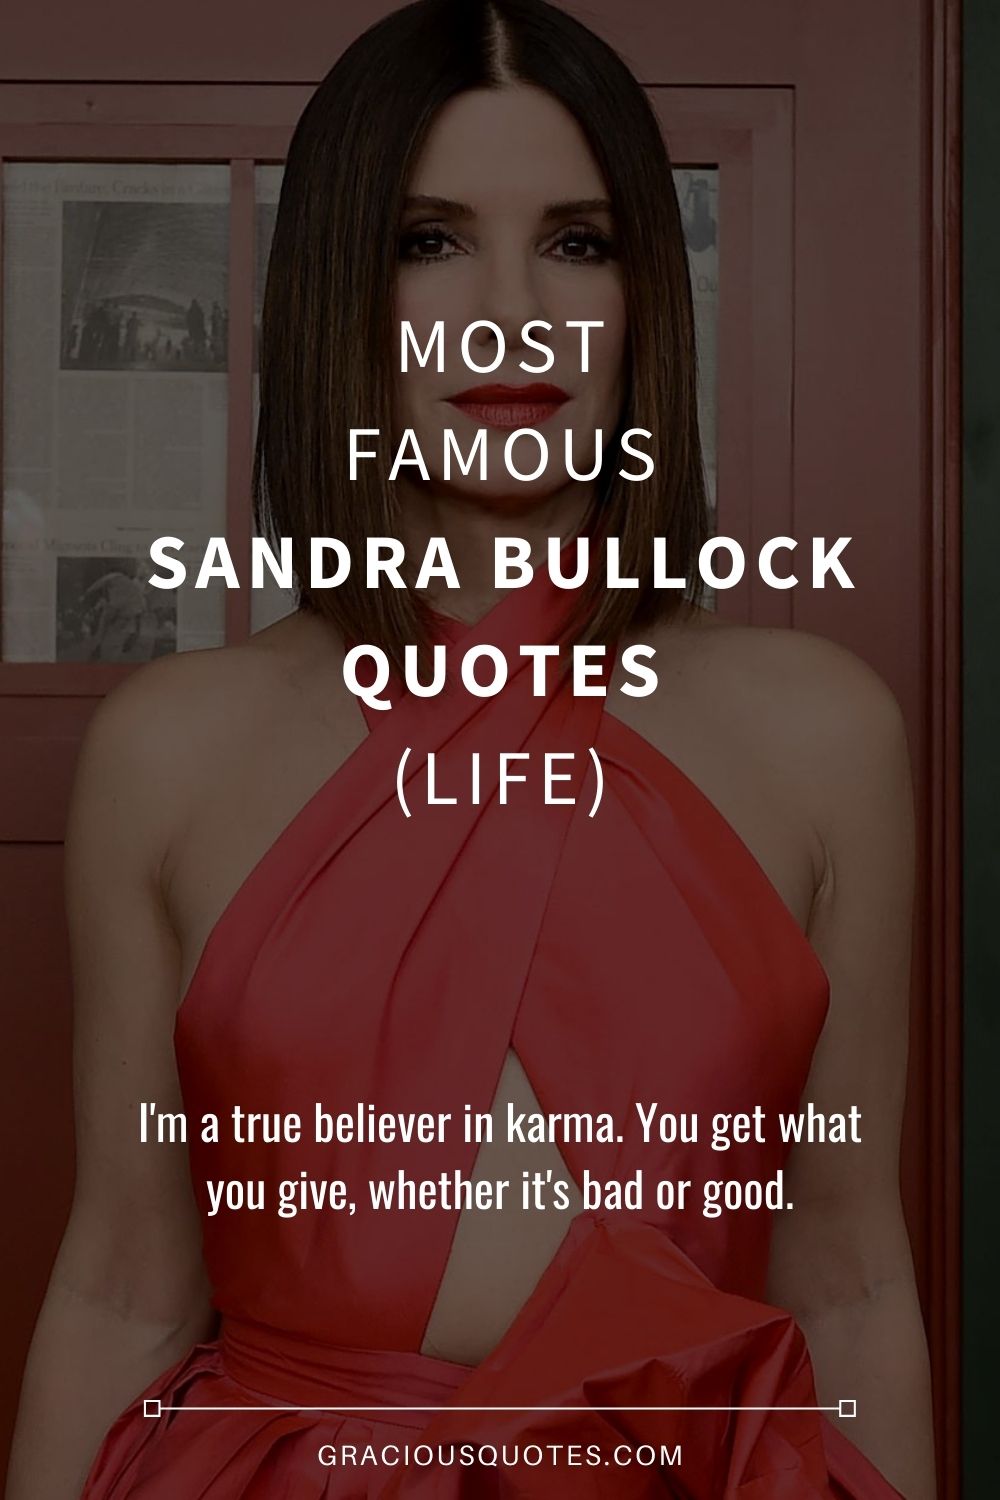 Most Famous Sandra Bullock Quotes (LIFE) - Gracious Quotes